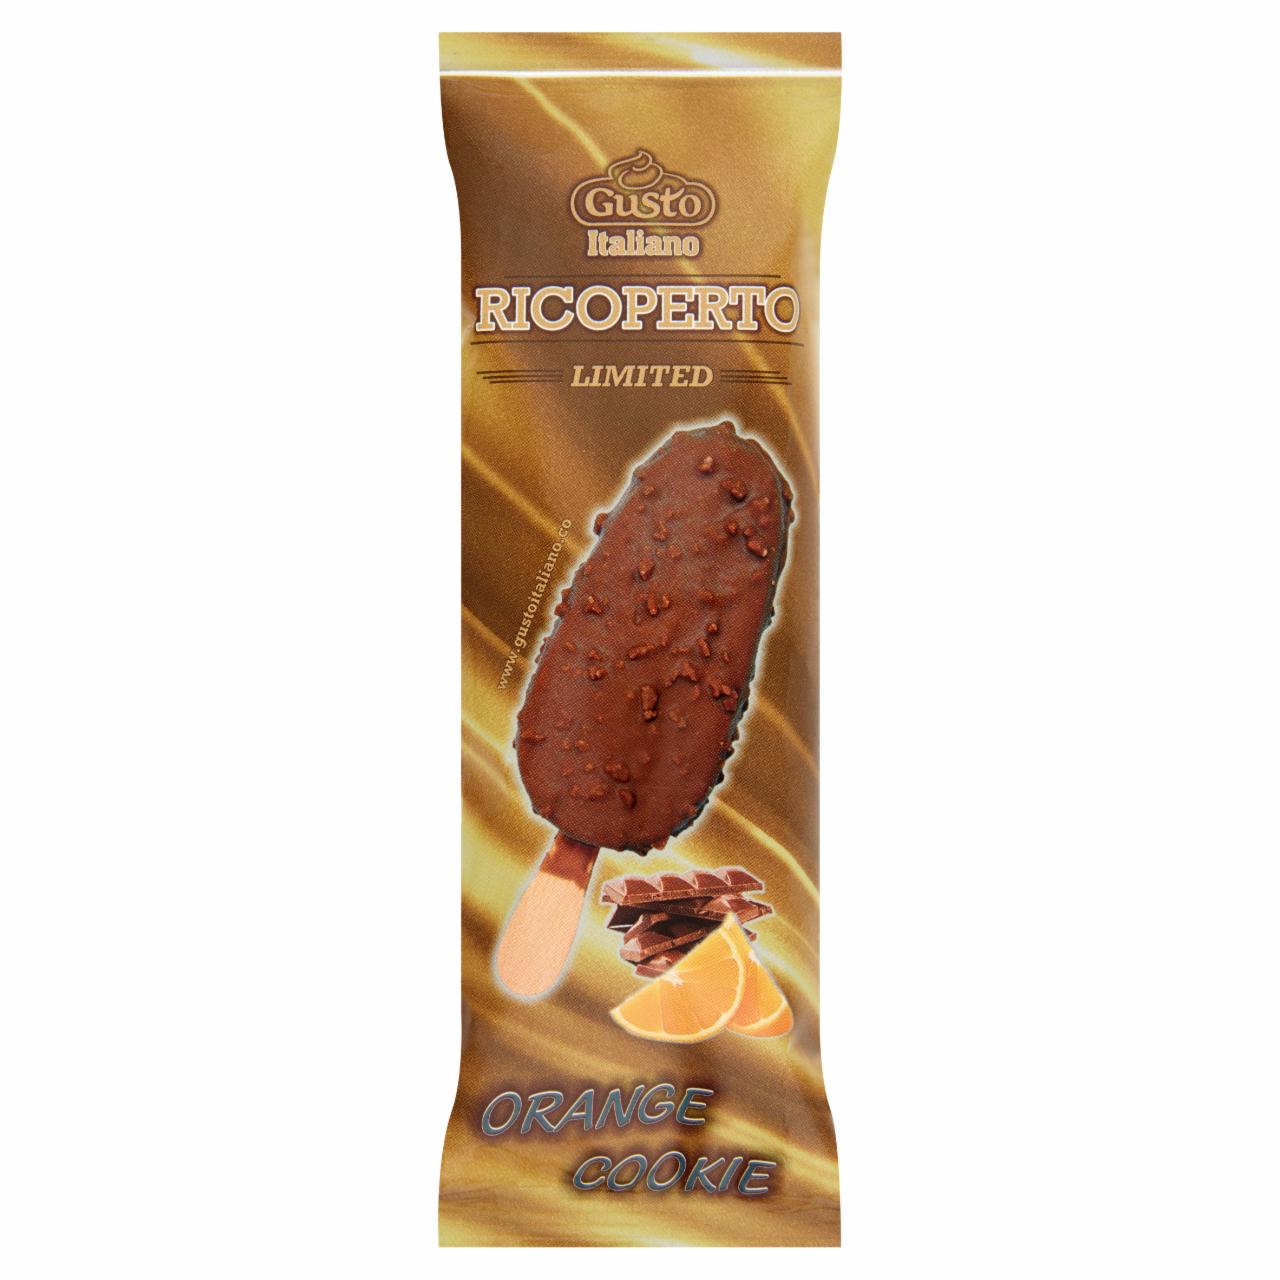 Képek - Gusto Italiano Ricoperto Orange Cookie csokoládé ízű jégkrém 100 ml